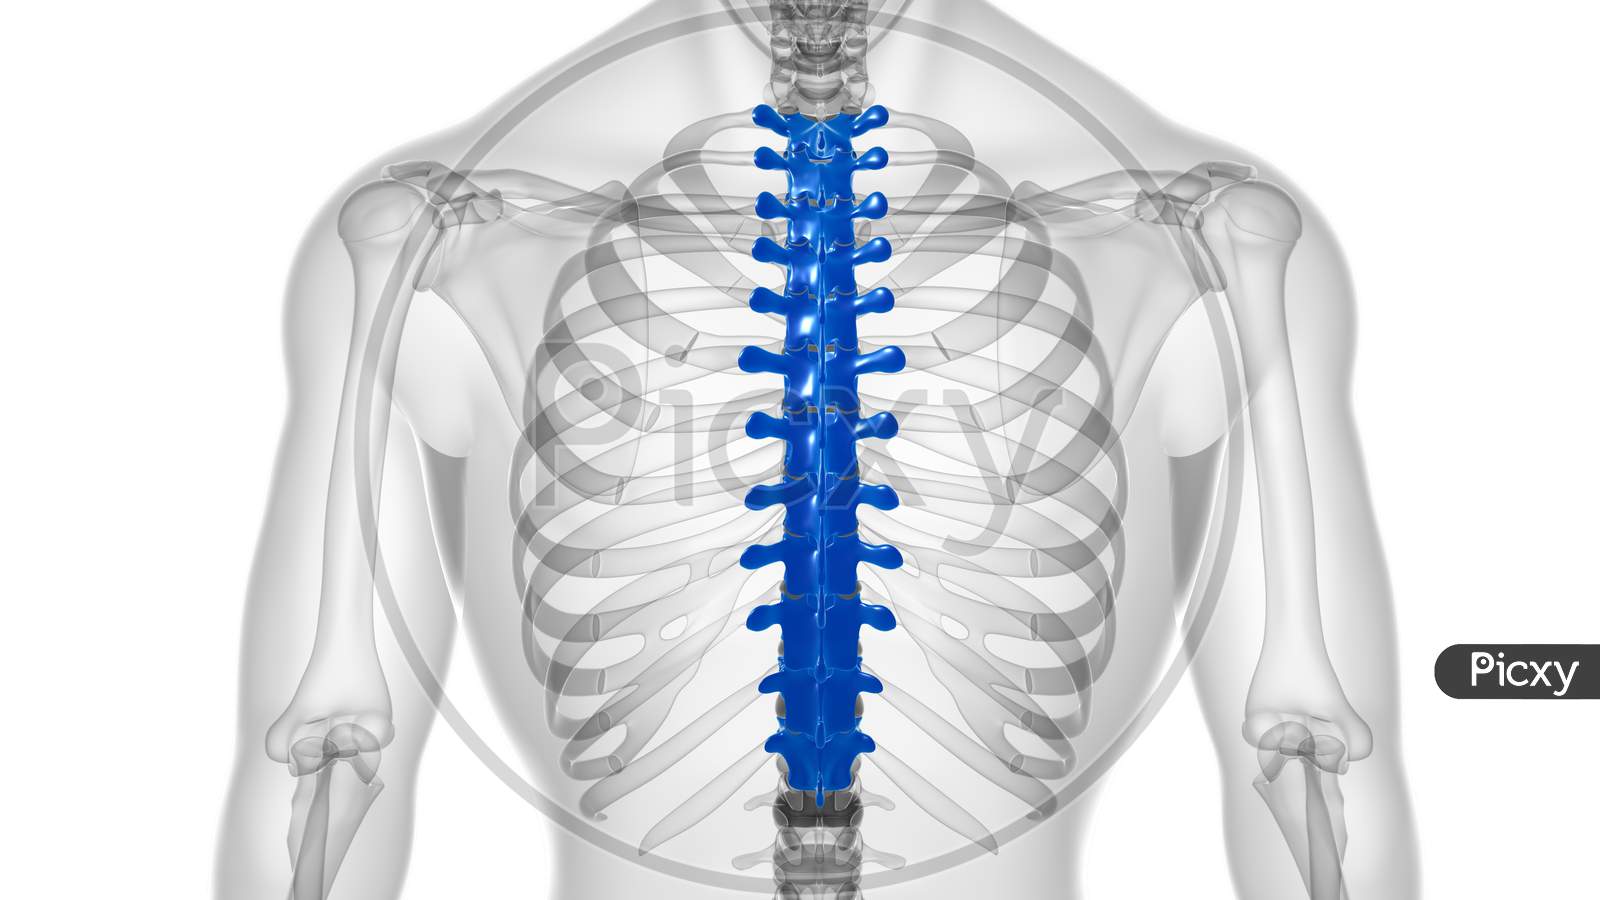 Human Skeleton Vertebral Column Thoracic Vertebrae Anatomy